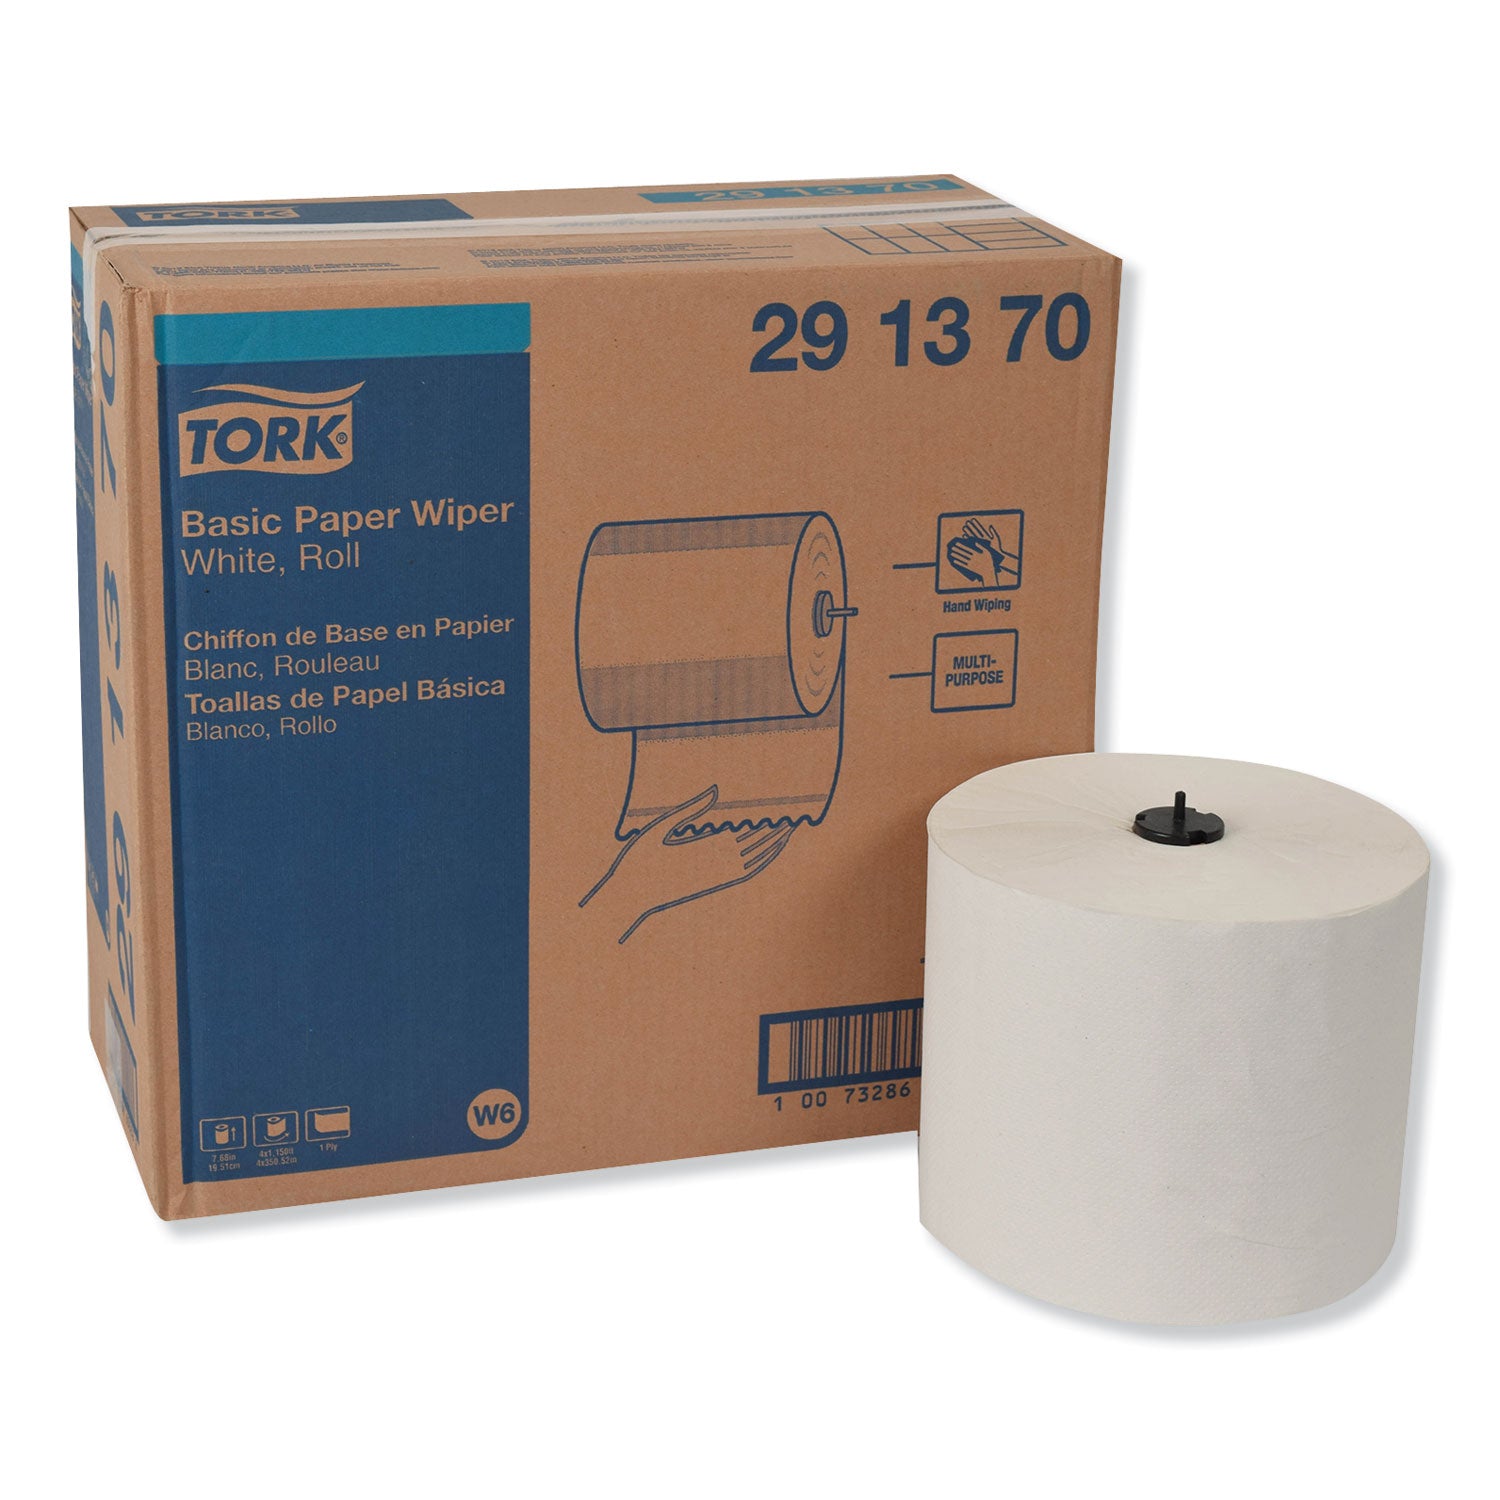 basic-paper-wiper-roll-towel-1-ply-768-x-1150-ft-white-4-rolls-carton_trk291370 - 1